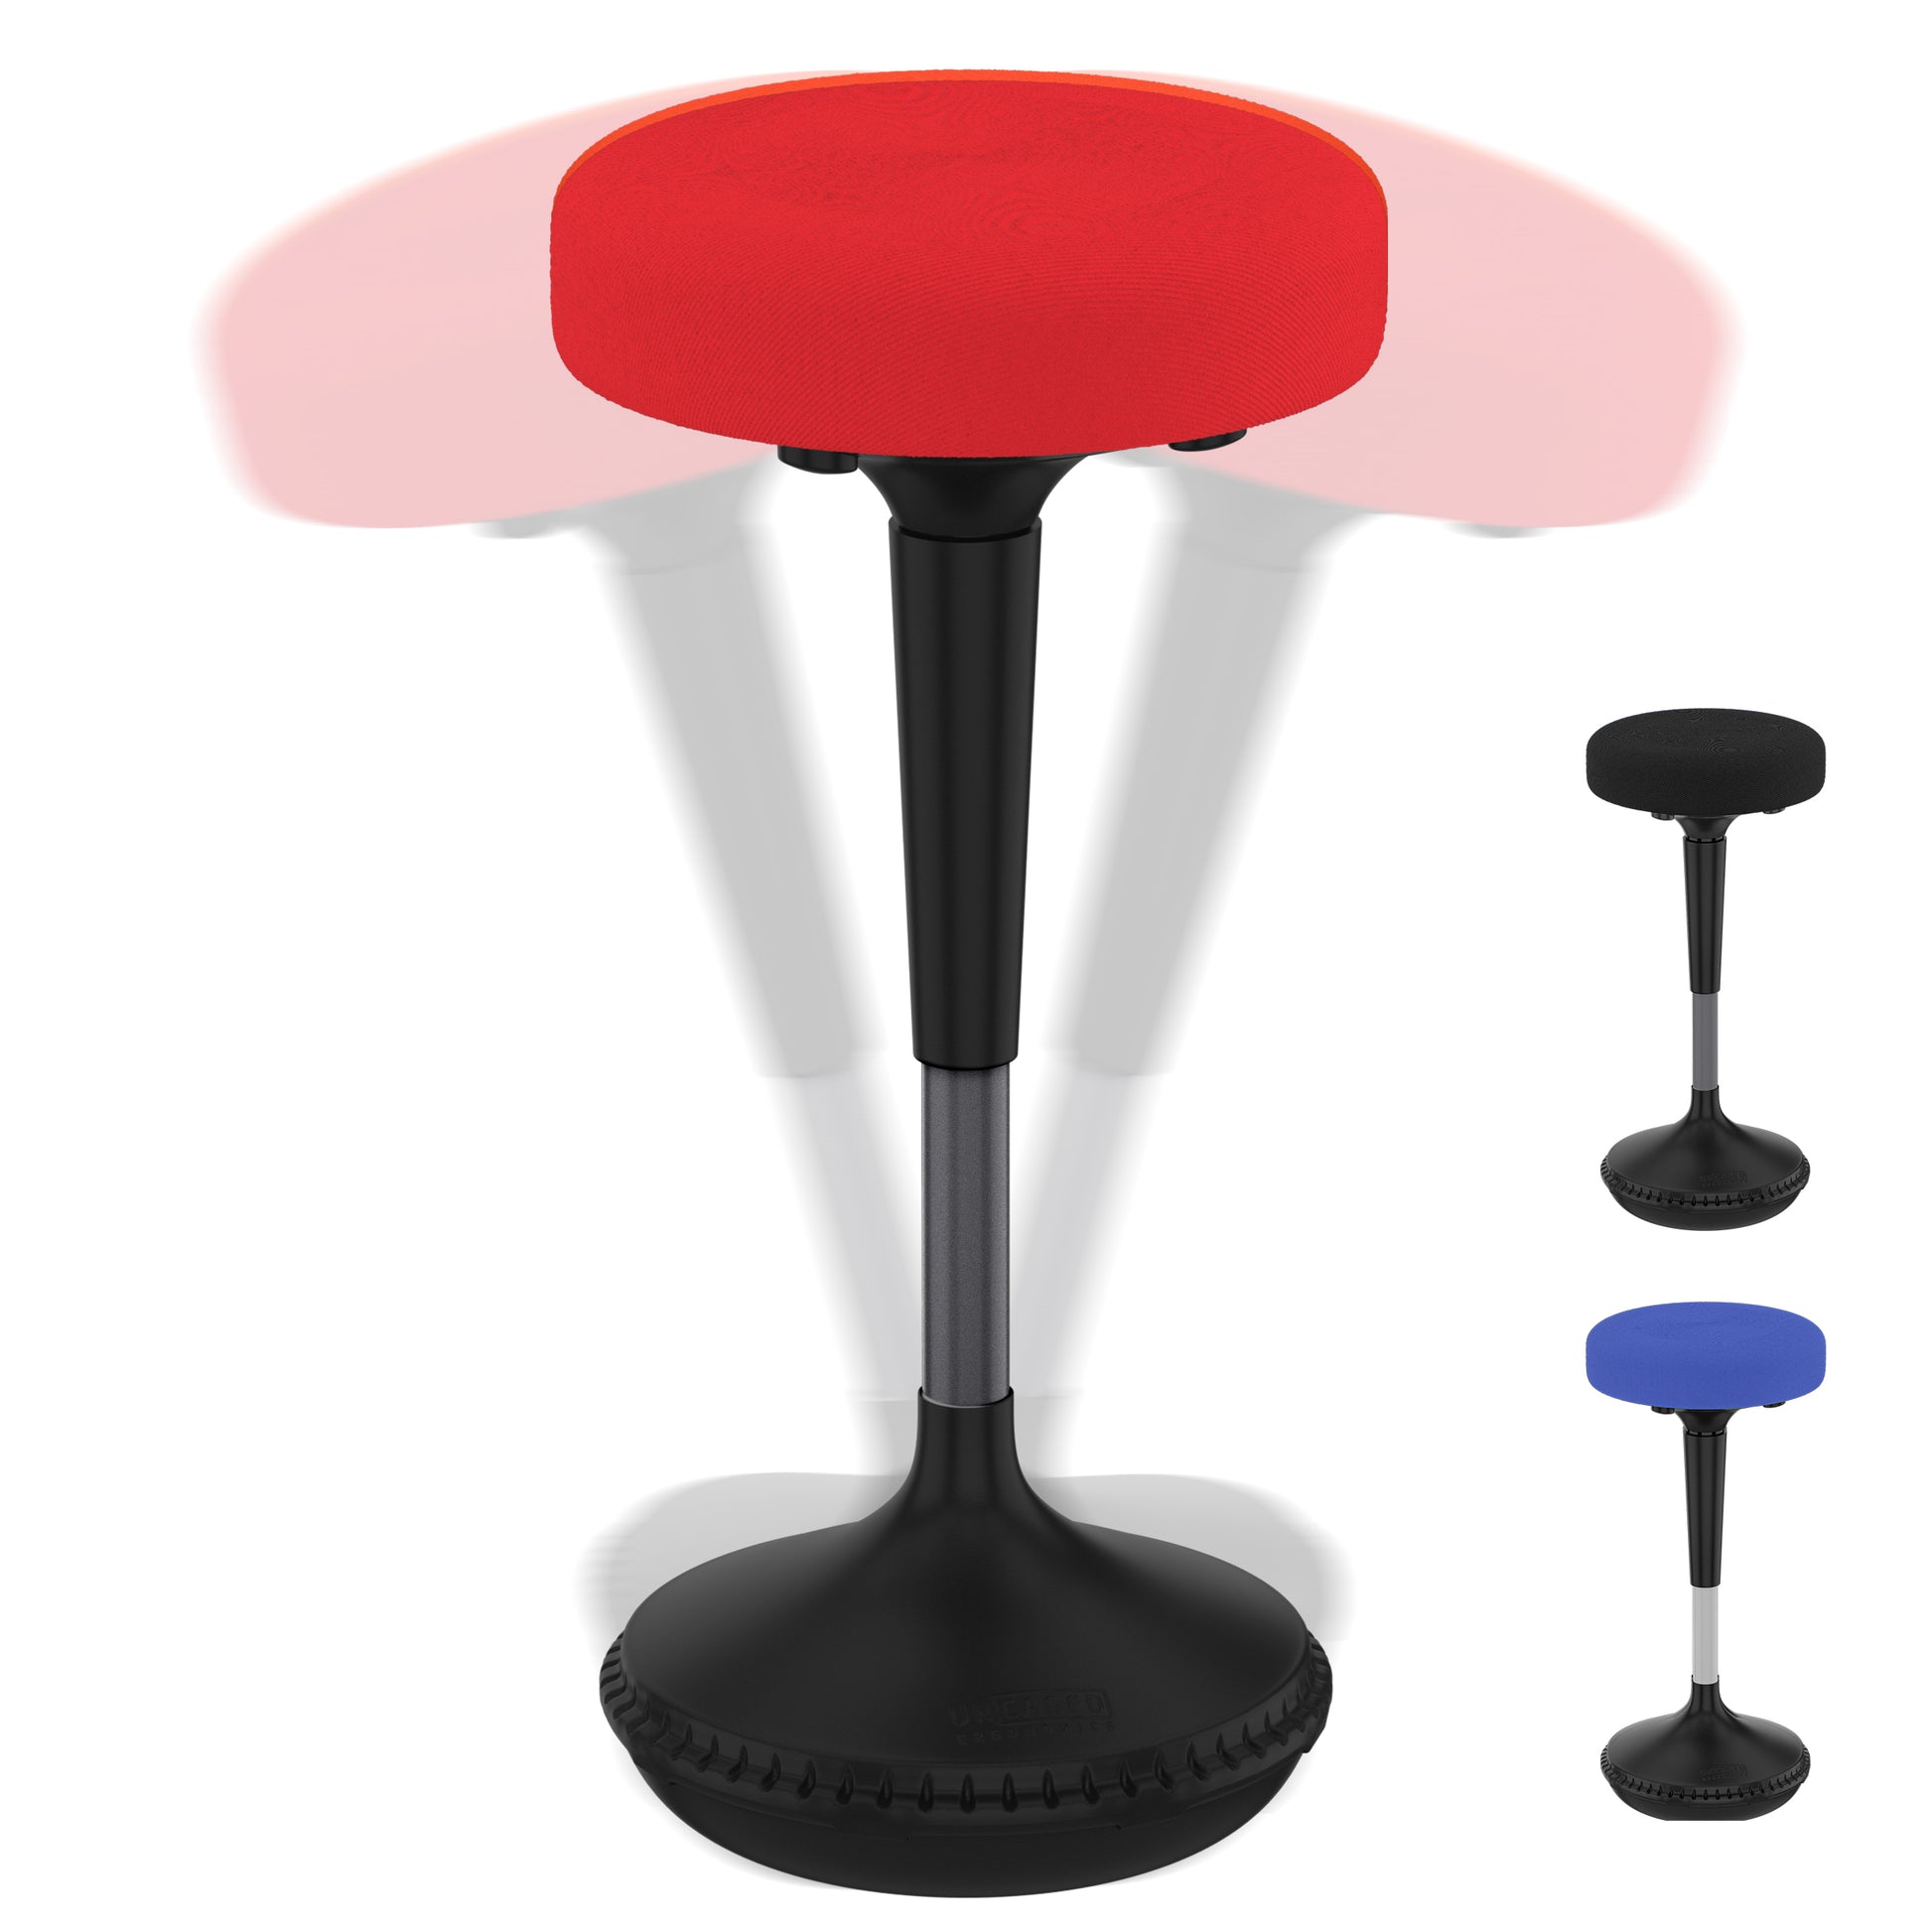 standing sit WOBBLE tall best ergonomic chair – stand UncagedErgonomics desk STOOL stool balance